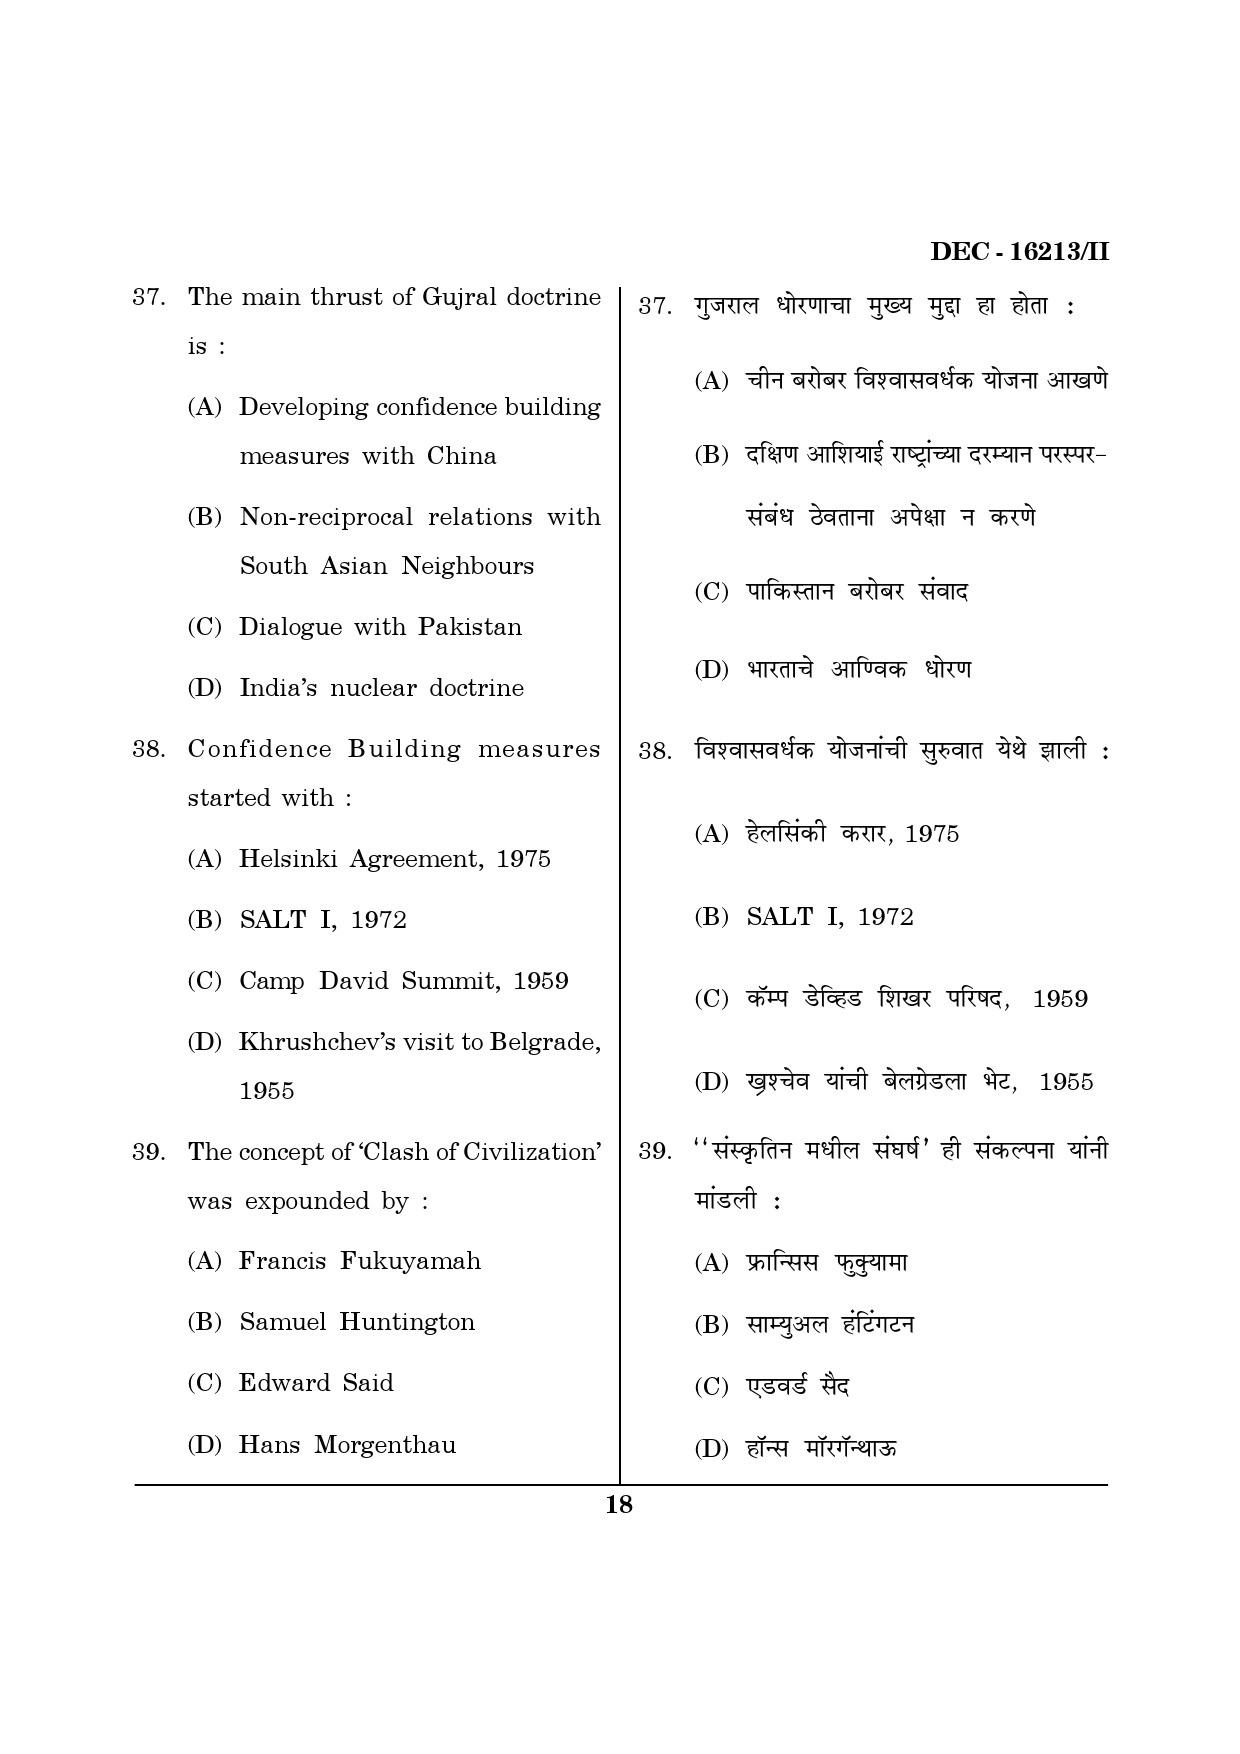 Maharashtra SET Defence and Strategic Studies Question Paper II December 2013 17